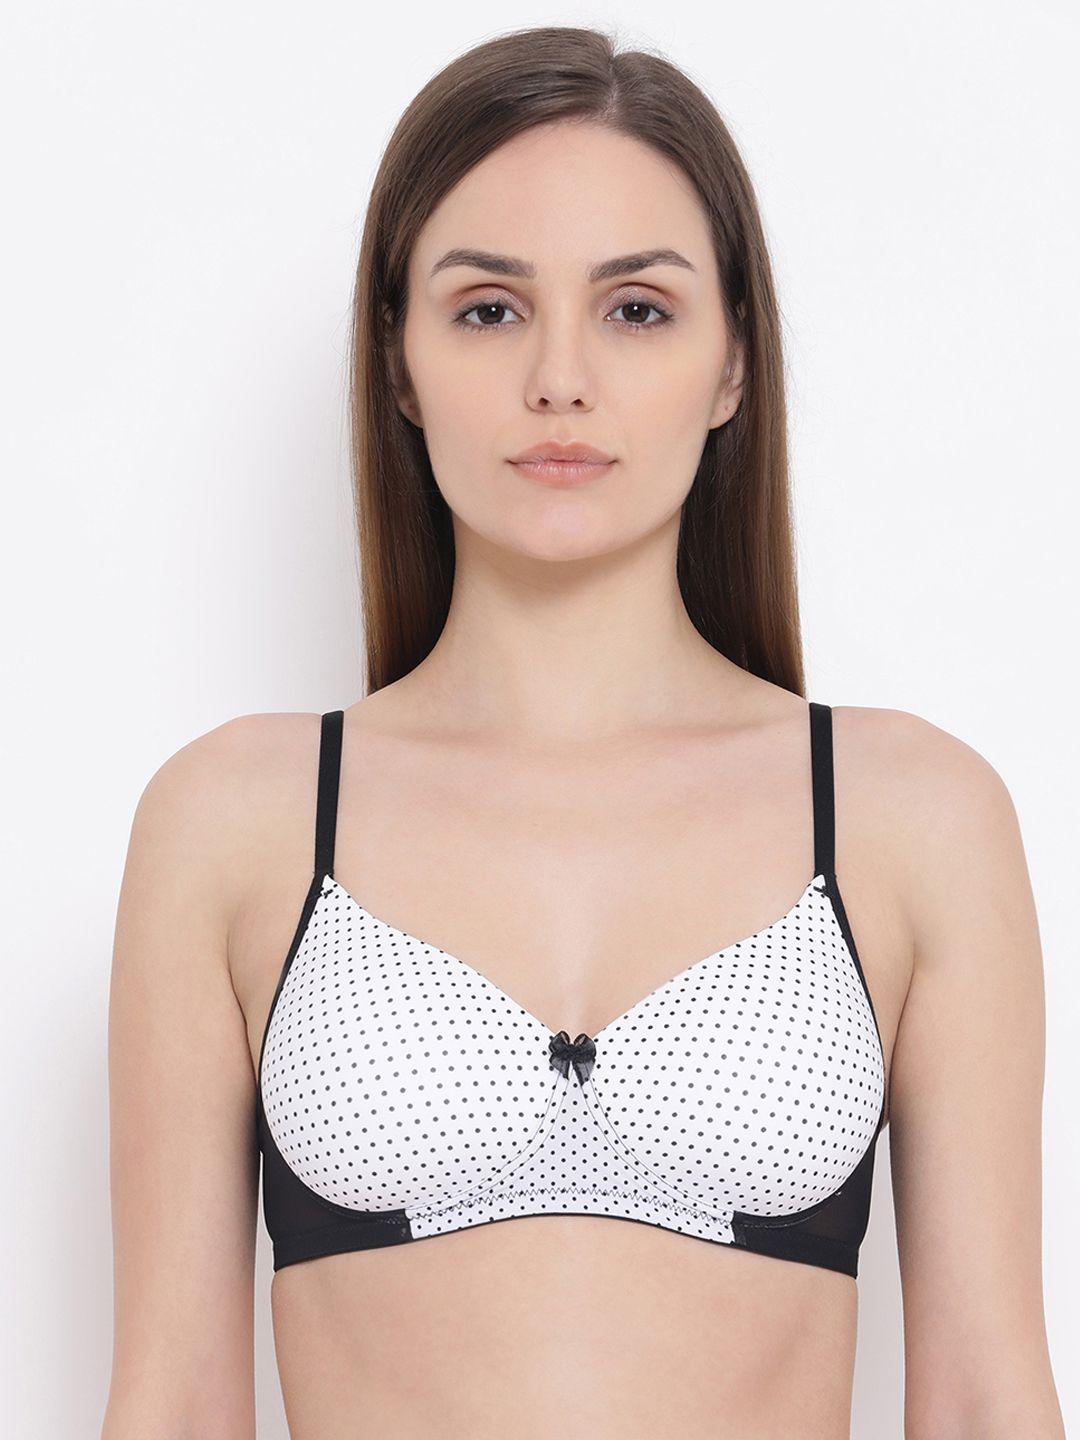 clovia white & black printed non-wired lightly padded t-shirt bra br1737m1832b